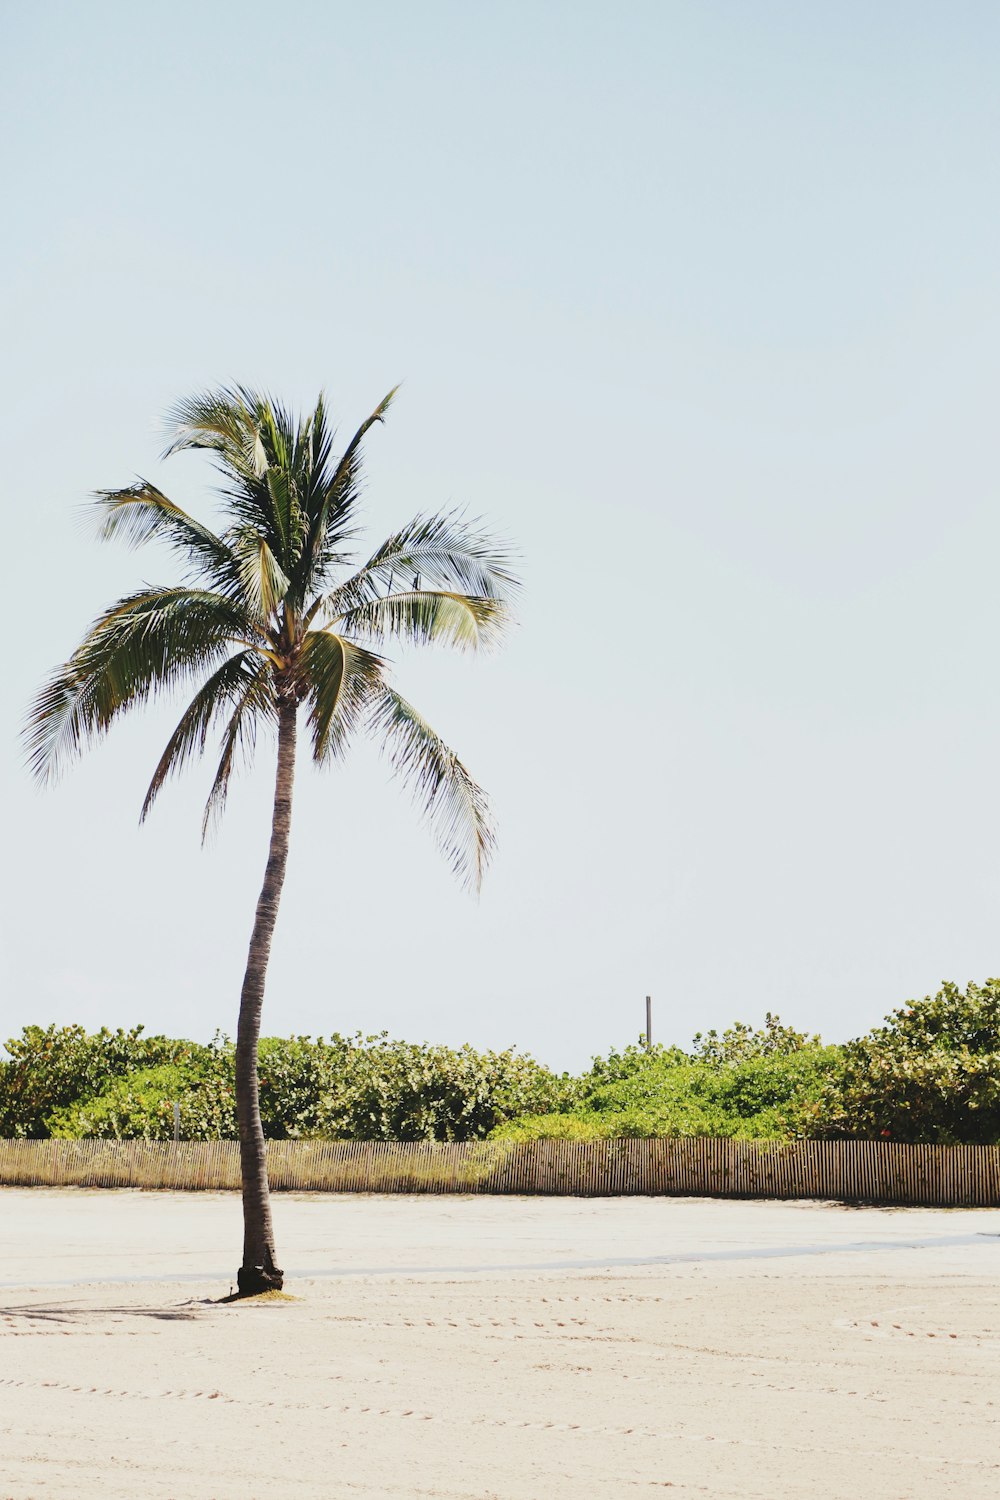 green palm tree near green grass field during daytime